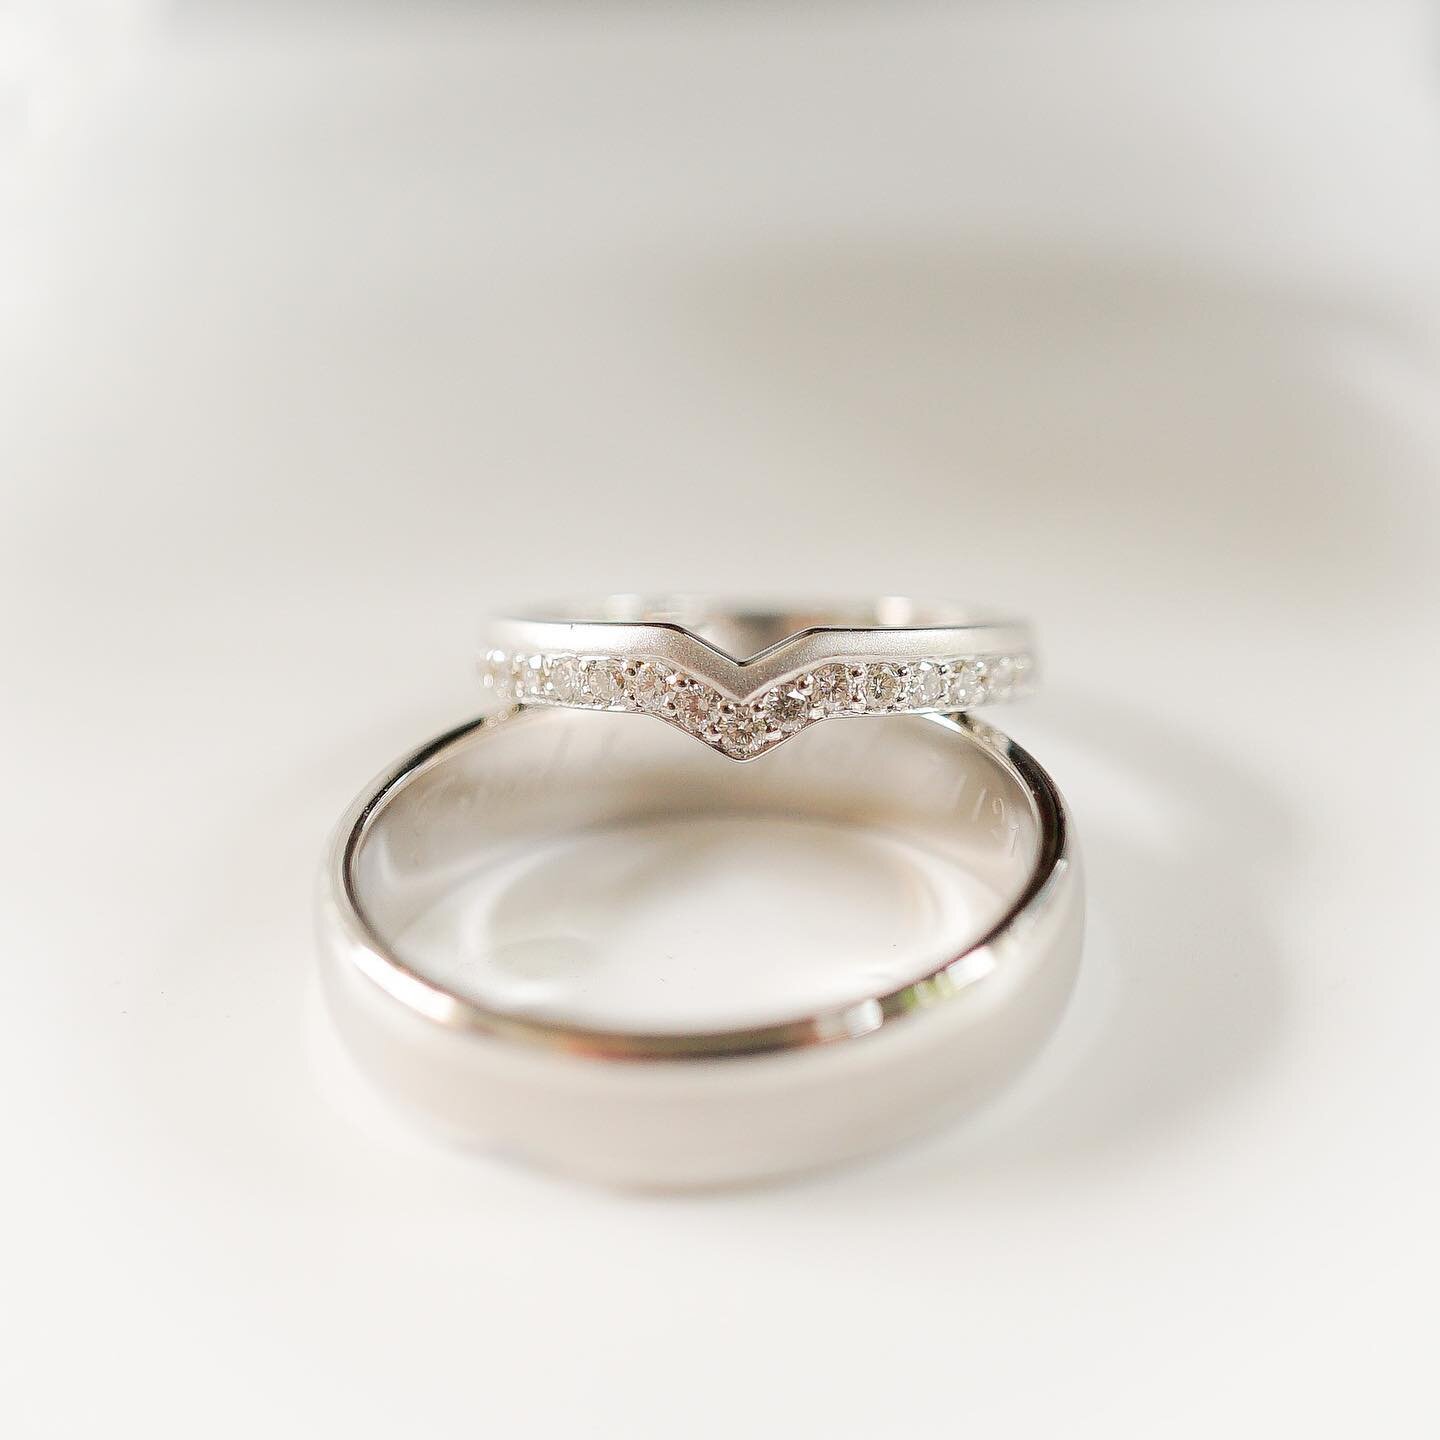 Custom pair of wedding rings for the sweetest @mfthuljannah &amp; husband 💍